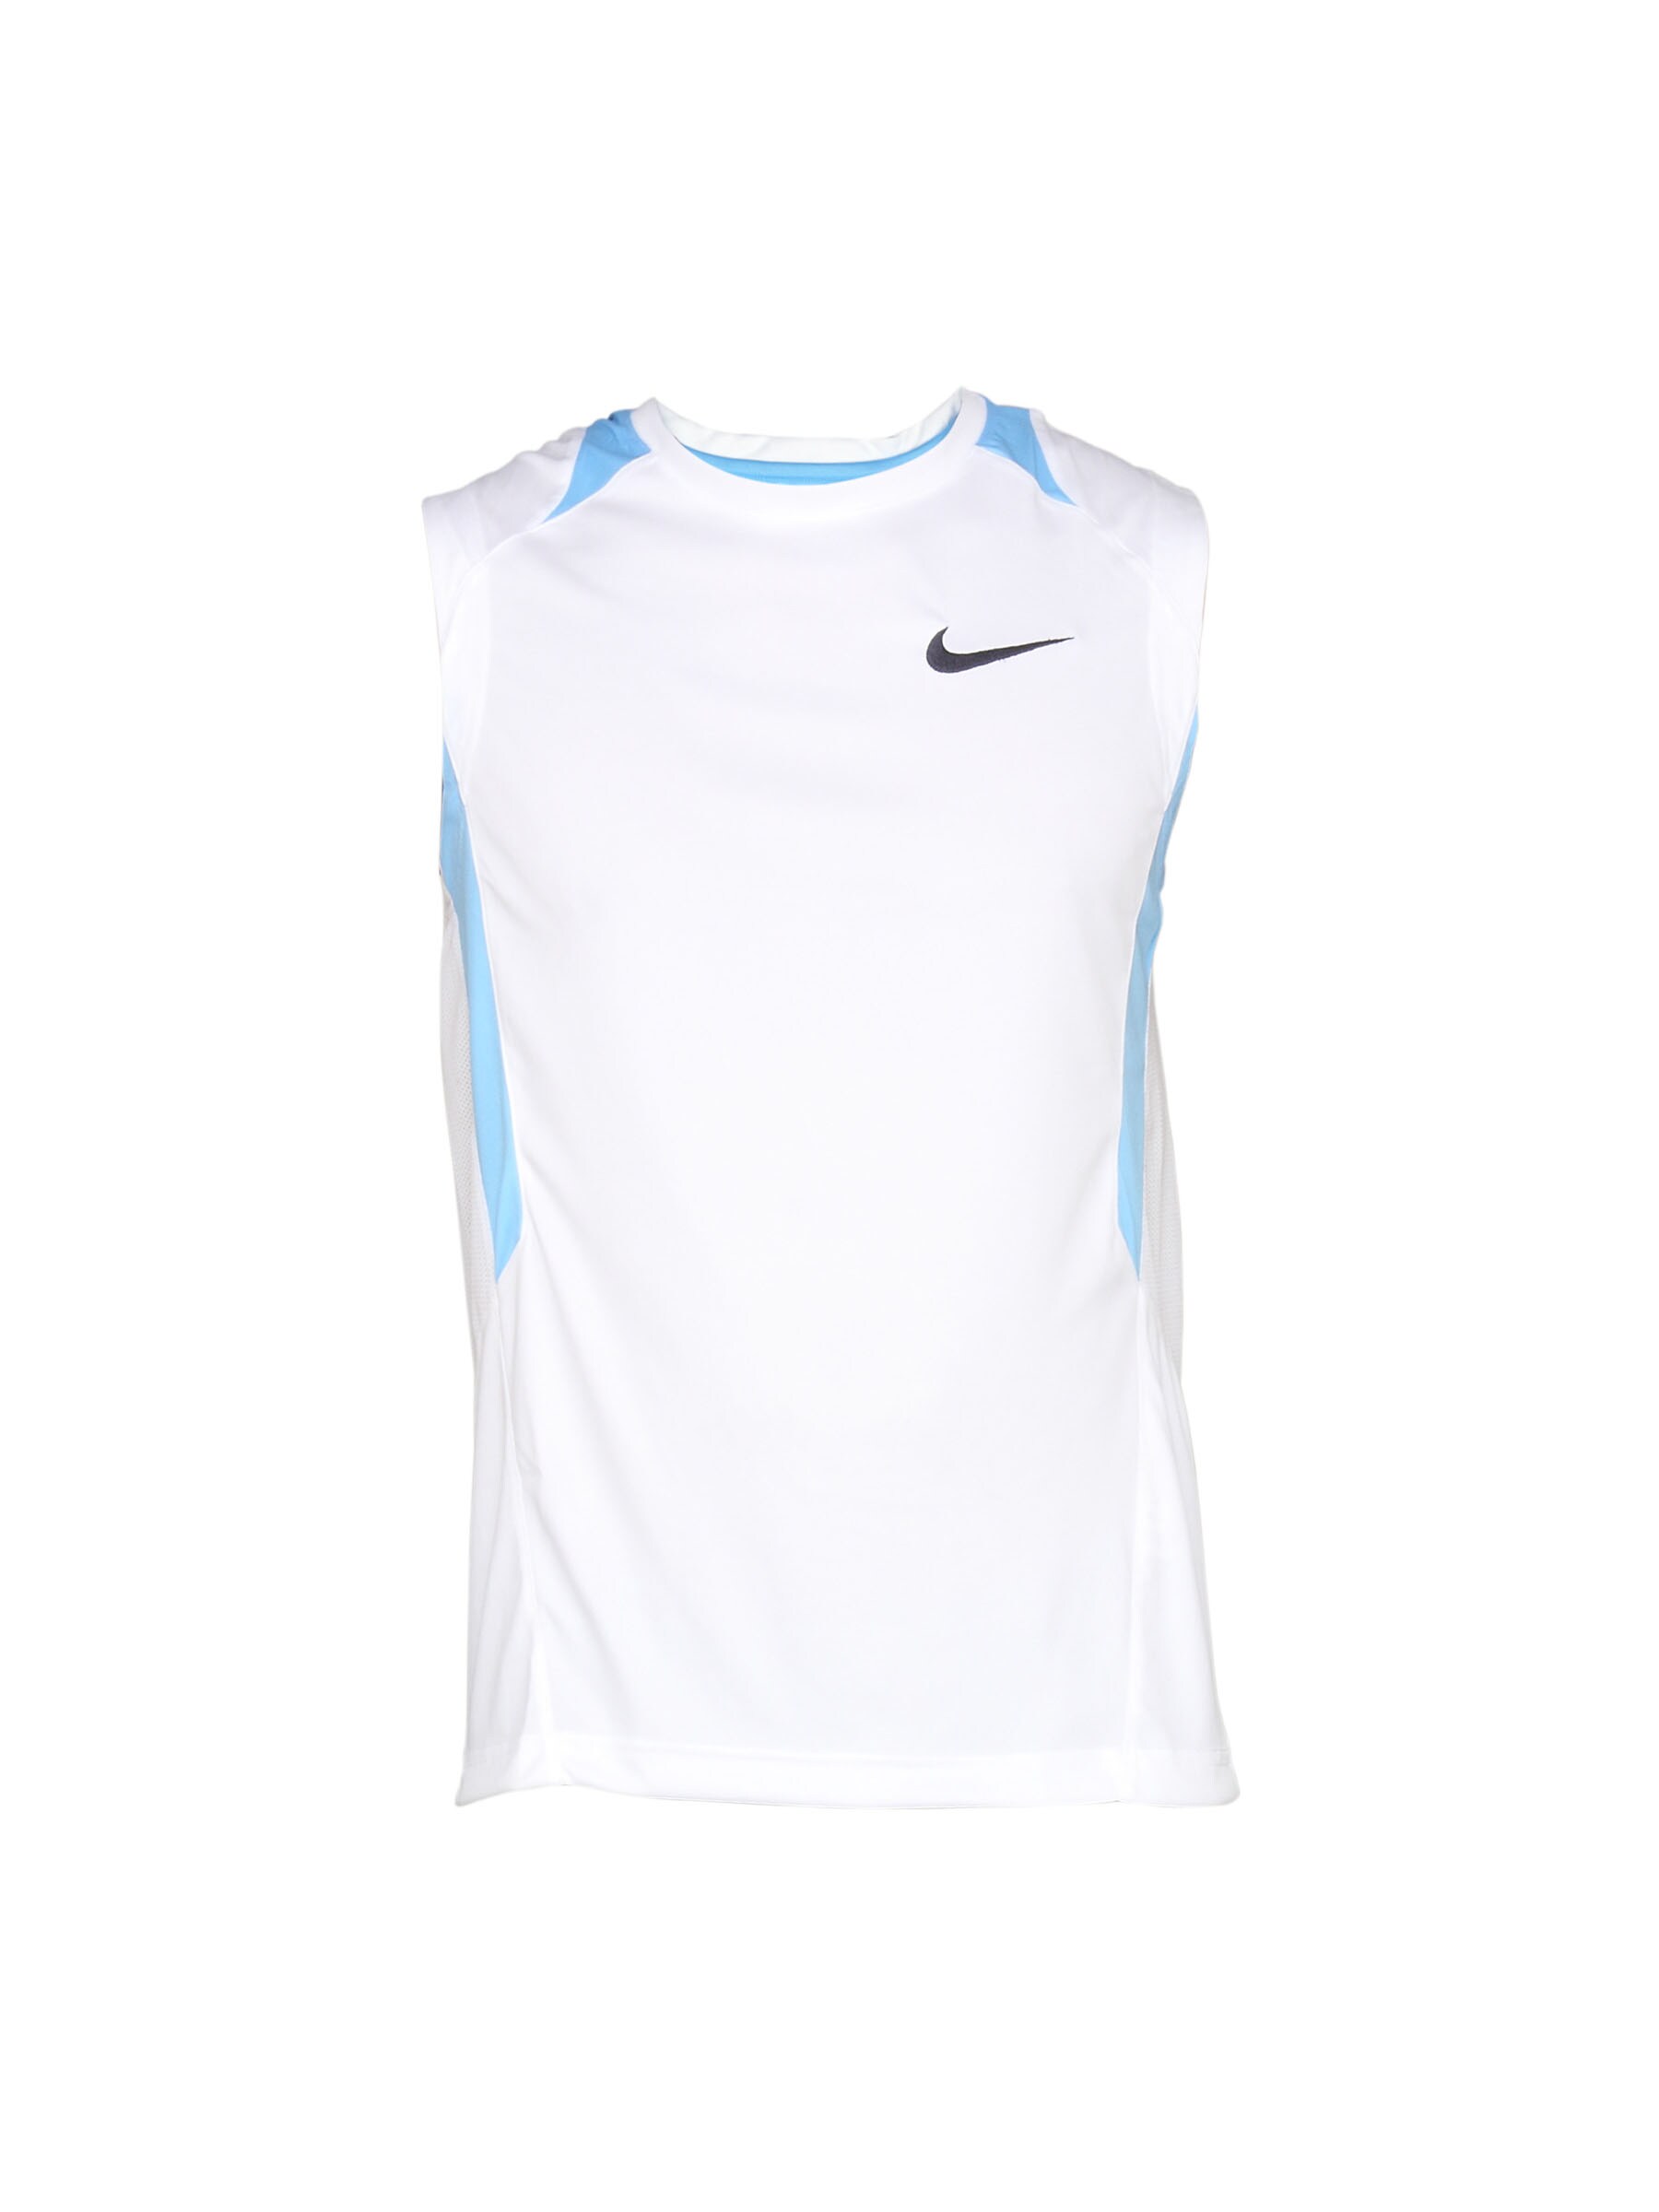 Nike Men's Training White T-shirt